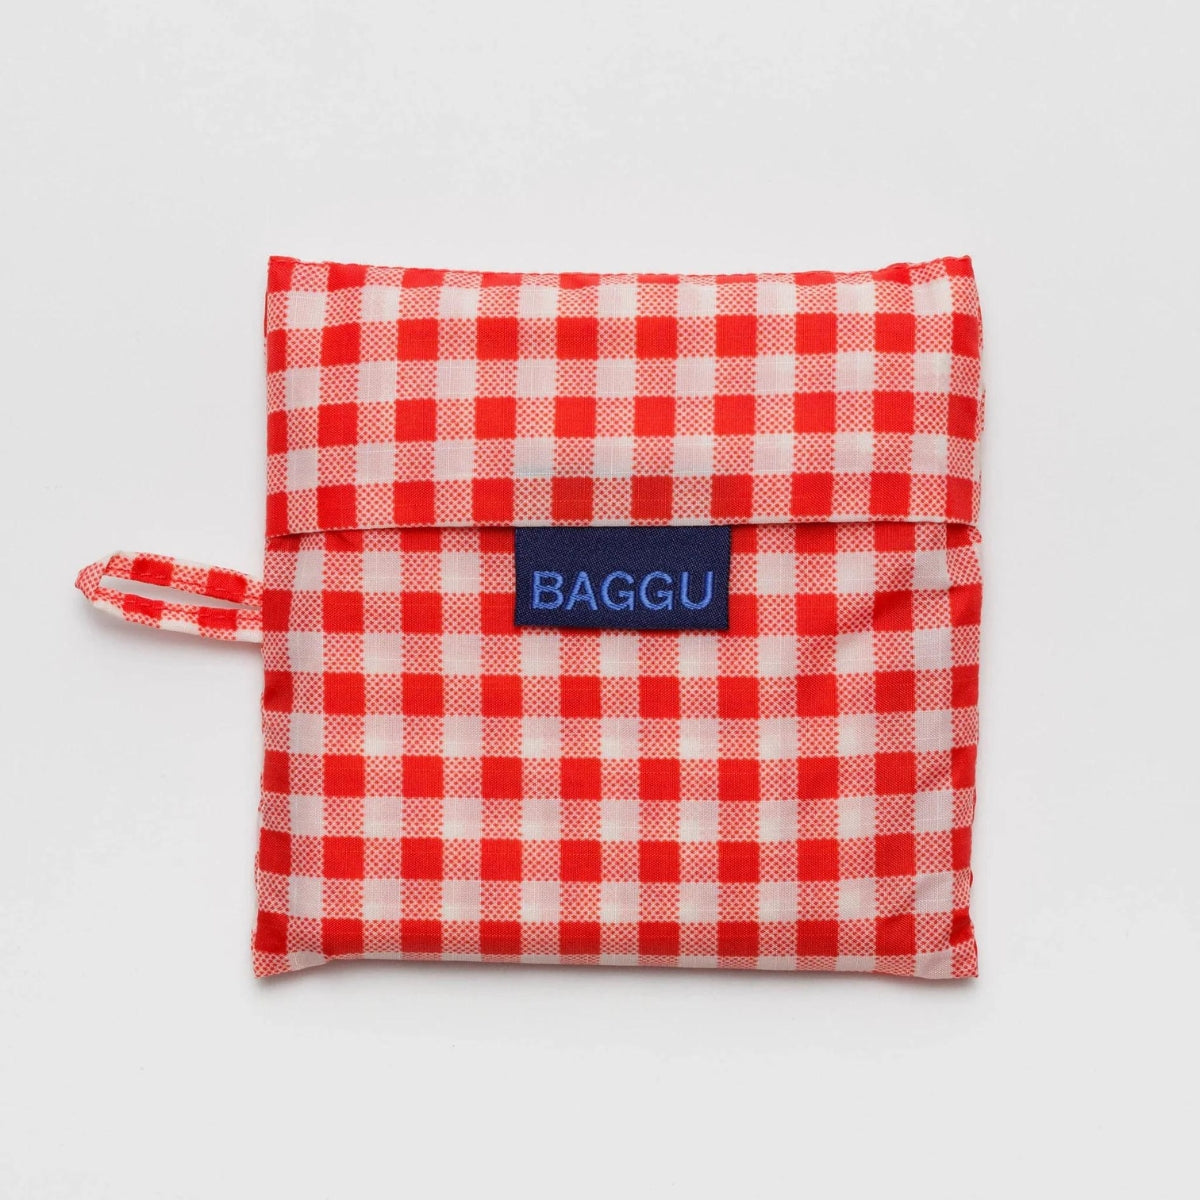 Baggu Standard Bag in Red Gingham